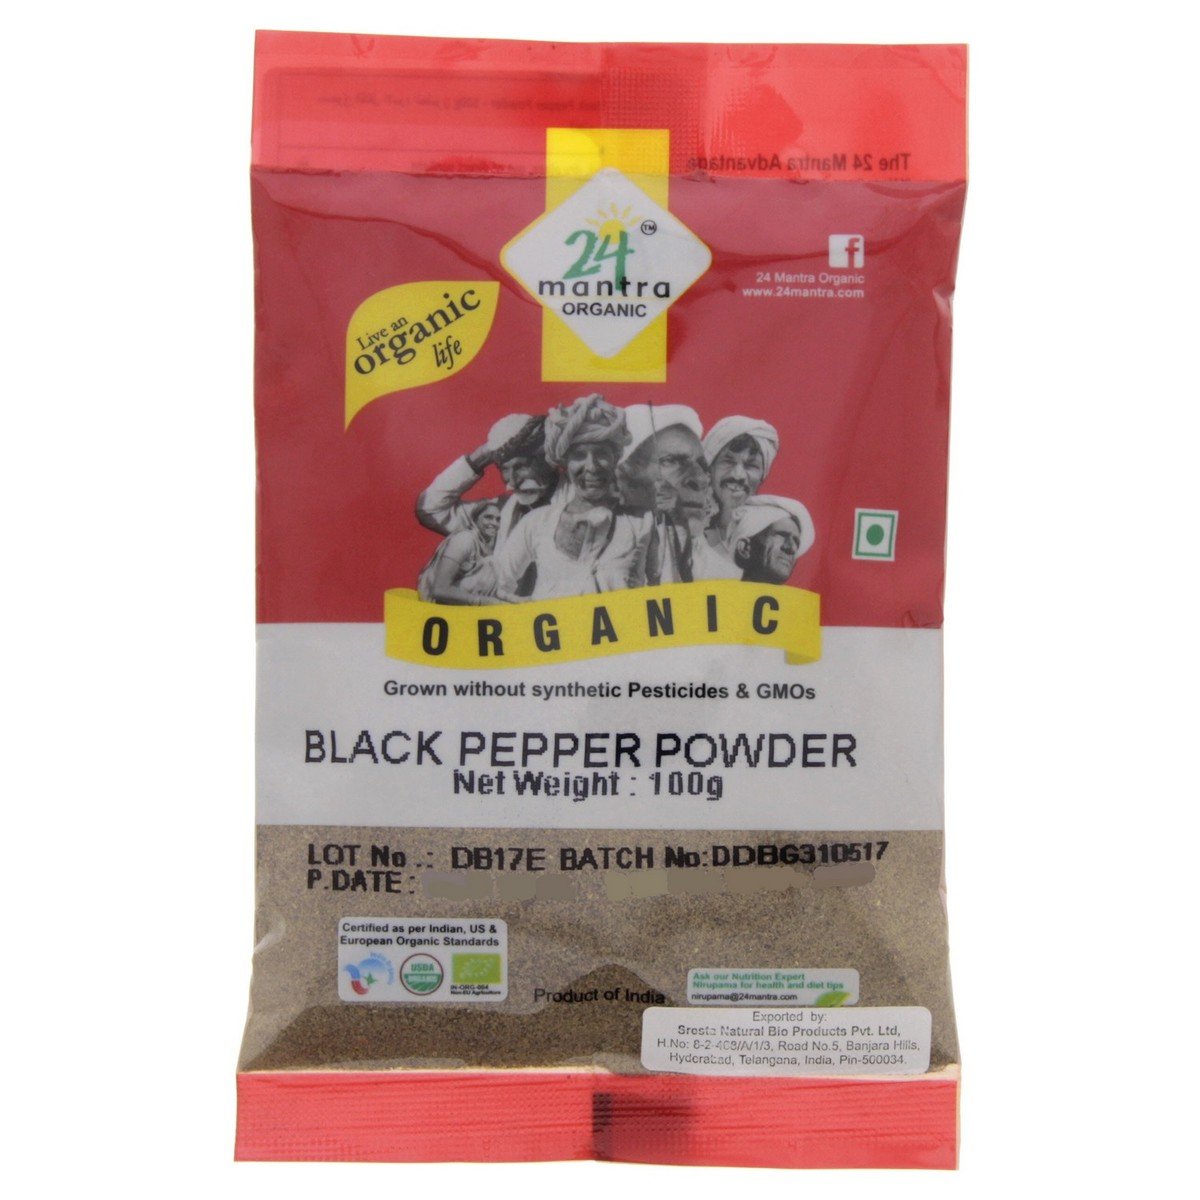 24 Mantra Organic Black Pepper Powder 100g